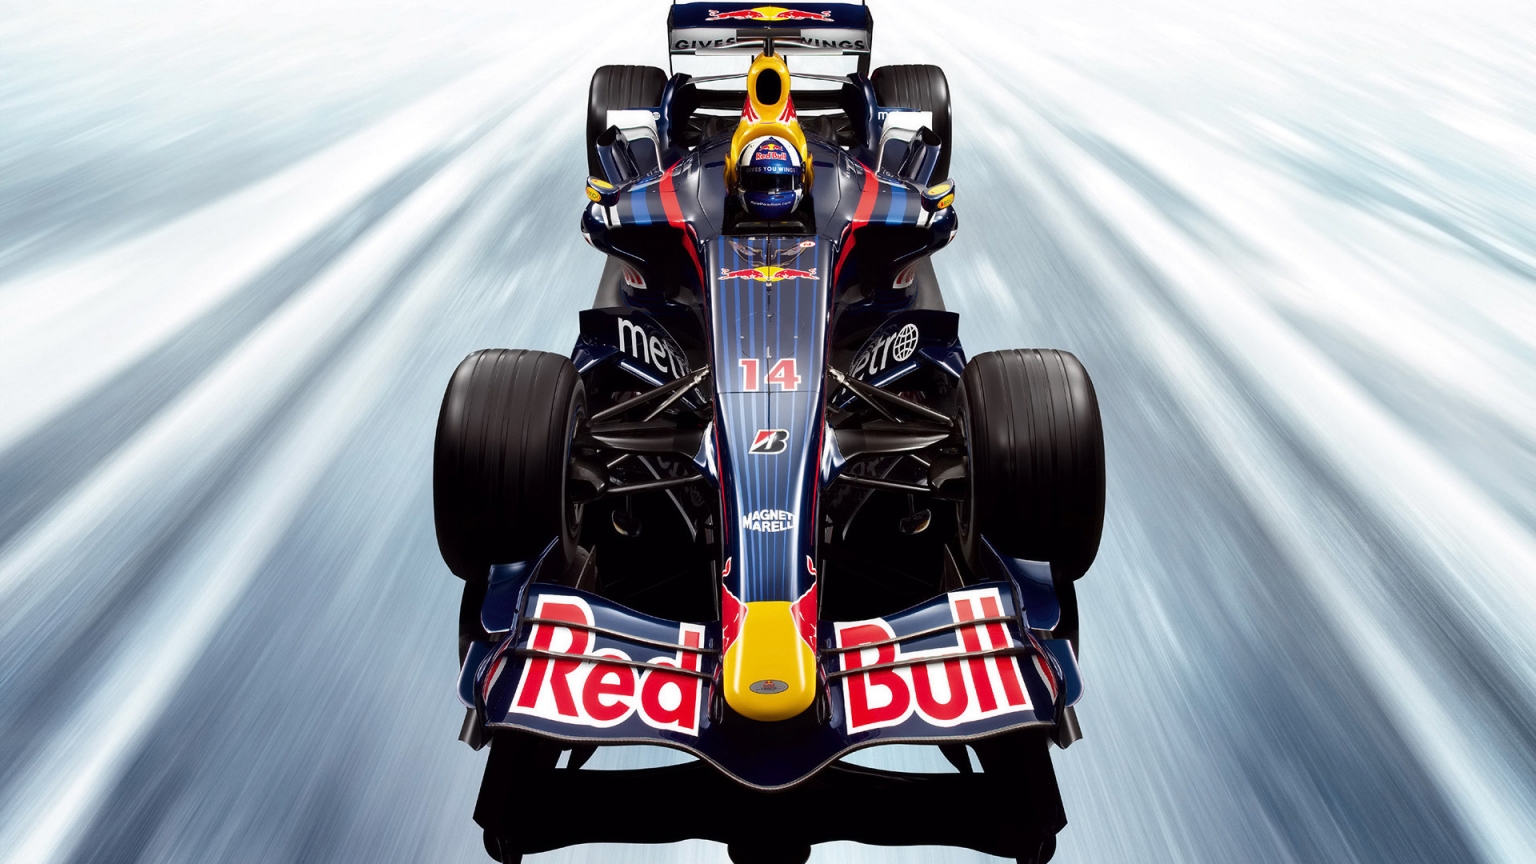 Red Bull RB3 F1 Studio Front for 1536 x 864 HDTV resolution